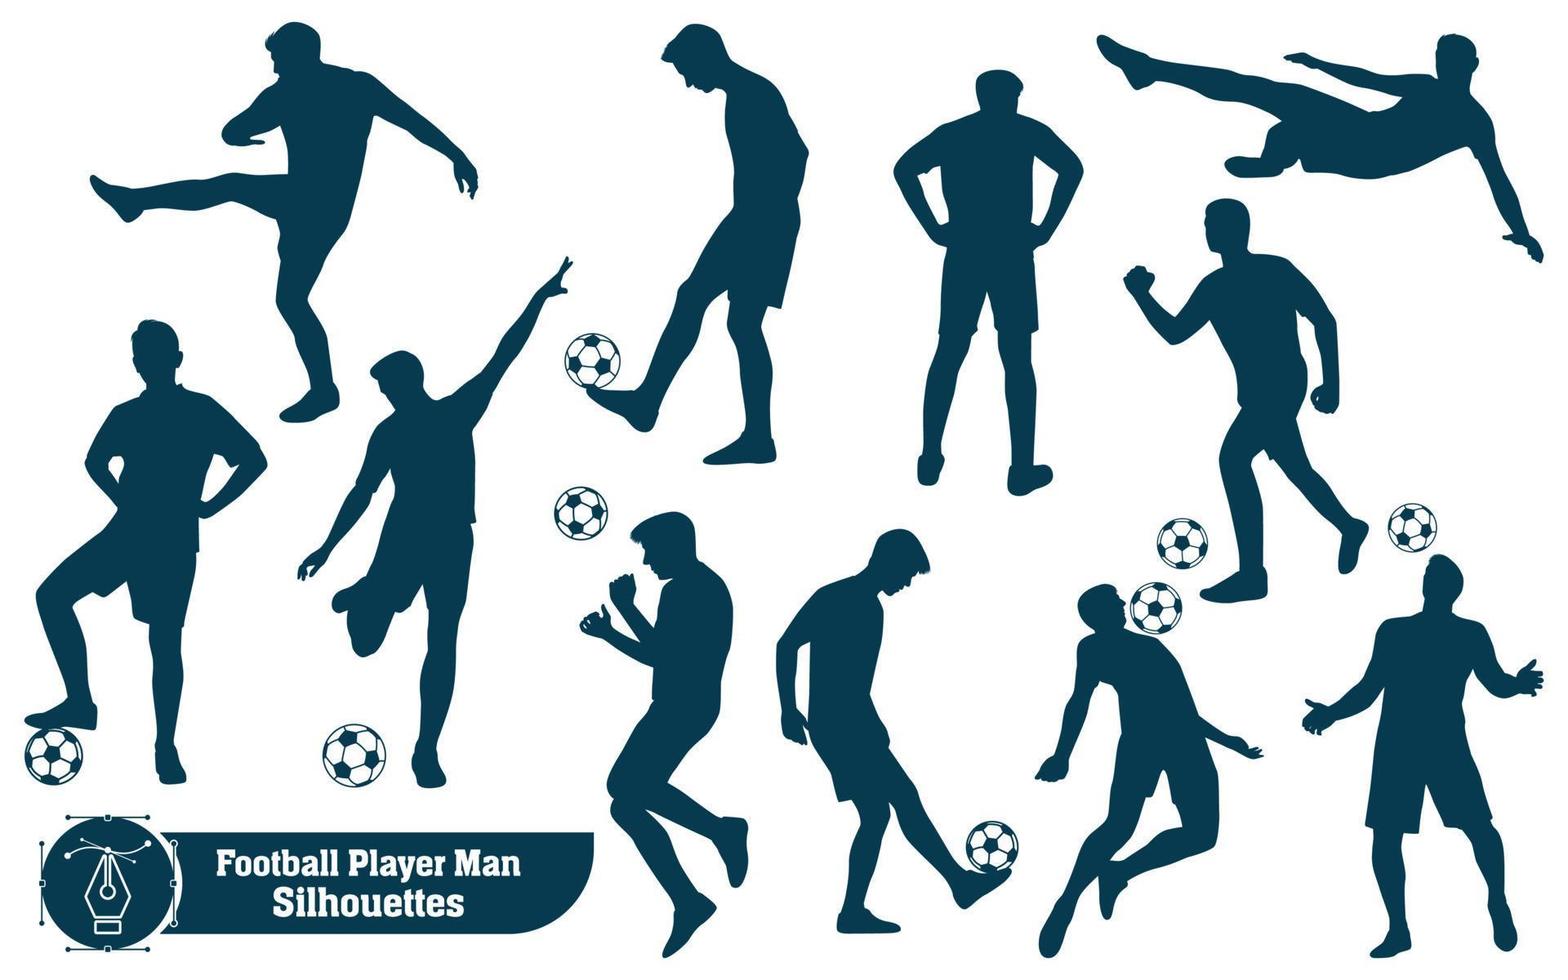 colección vectorial de siluetas masculinas jugando fútbol o fútbol en diferentes poses vector